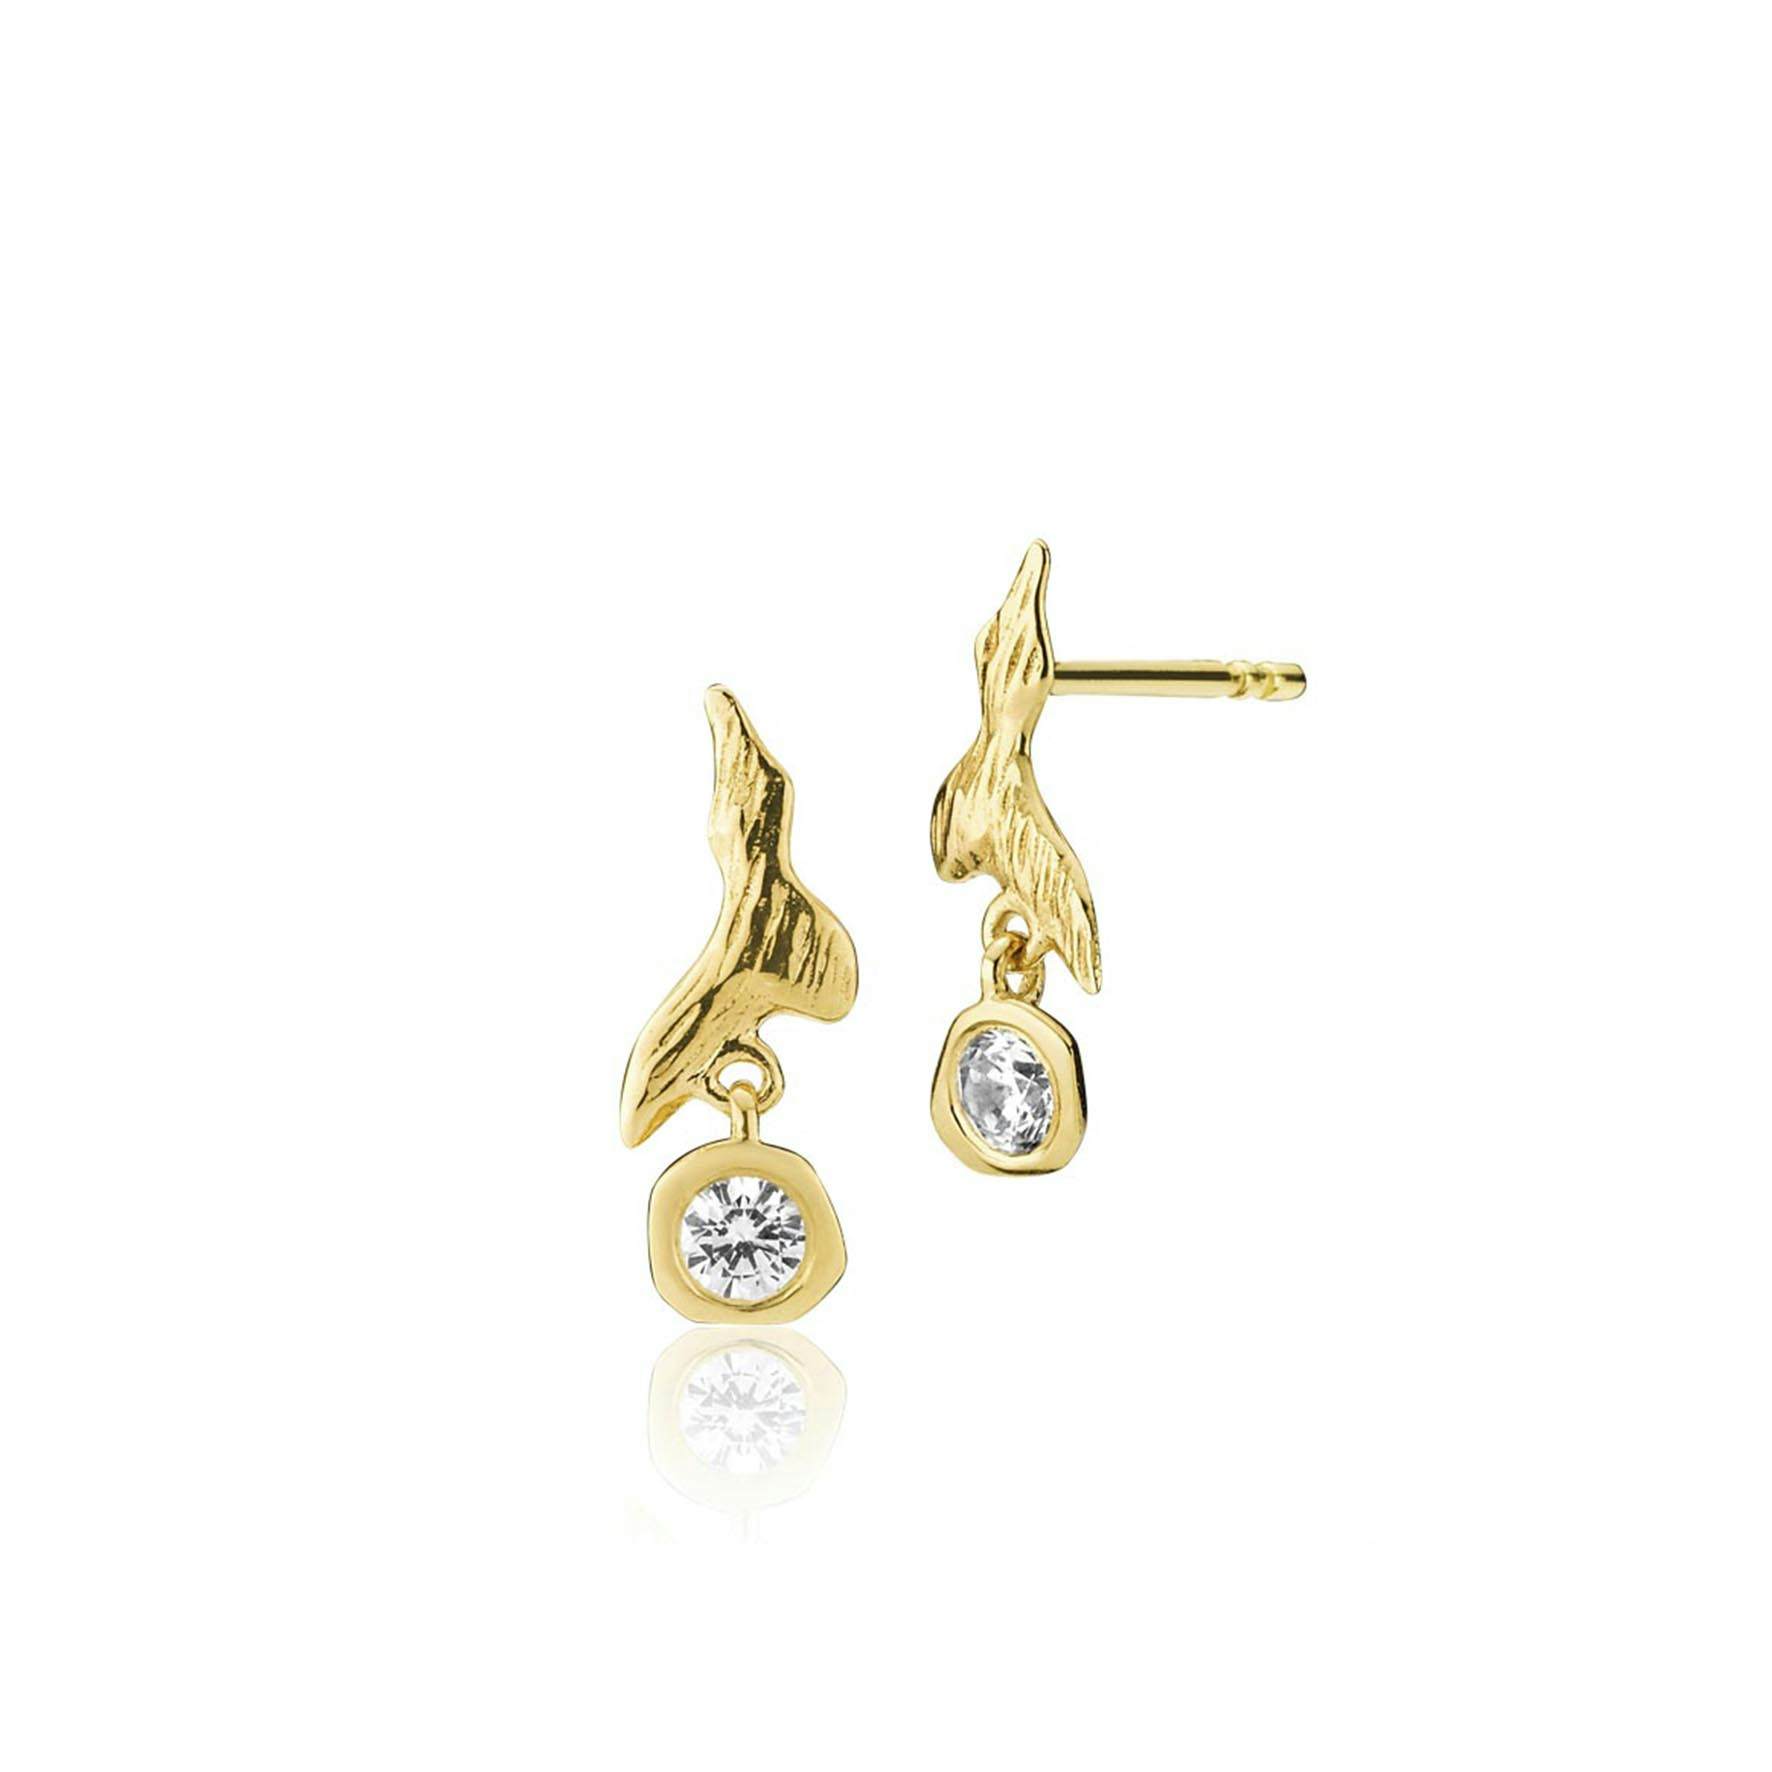 Fairy Earrings With Stone von Izabel Camille in Vergoldet-Silber Sterling 925